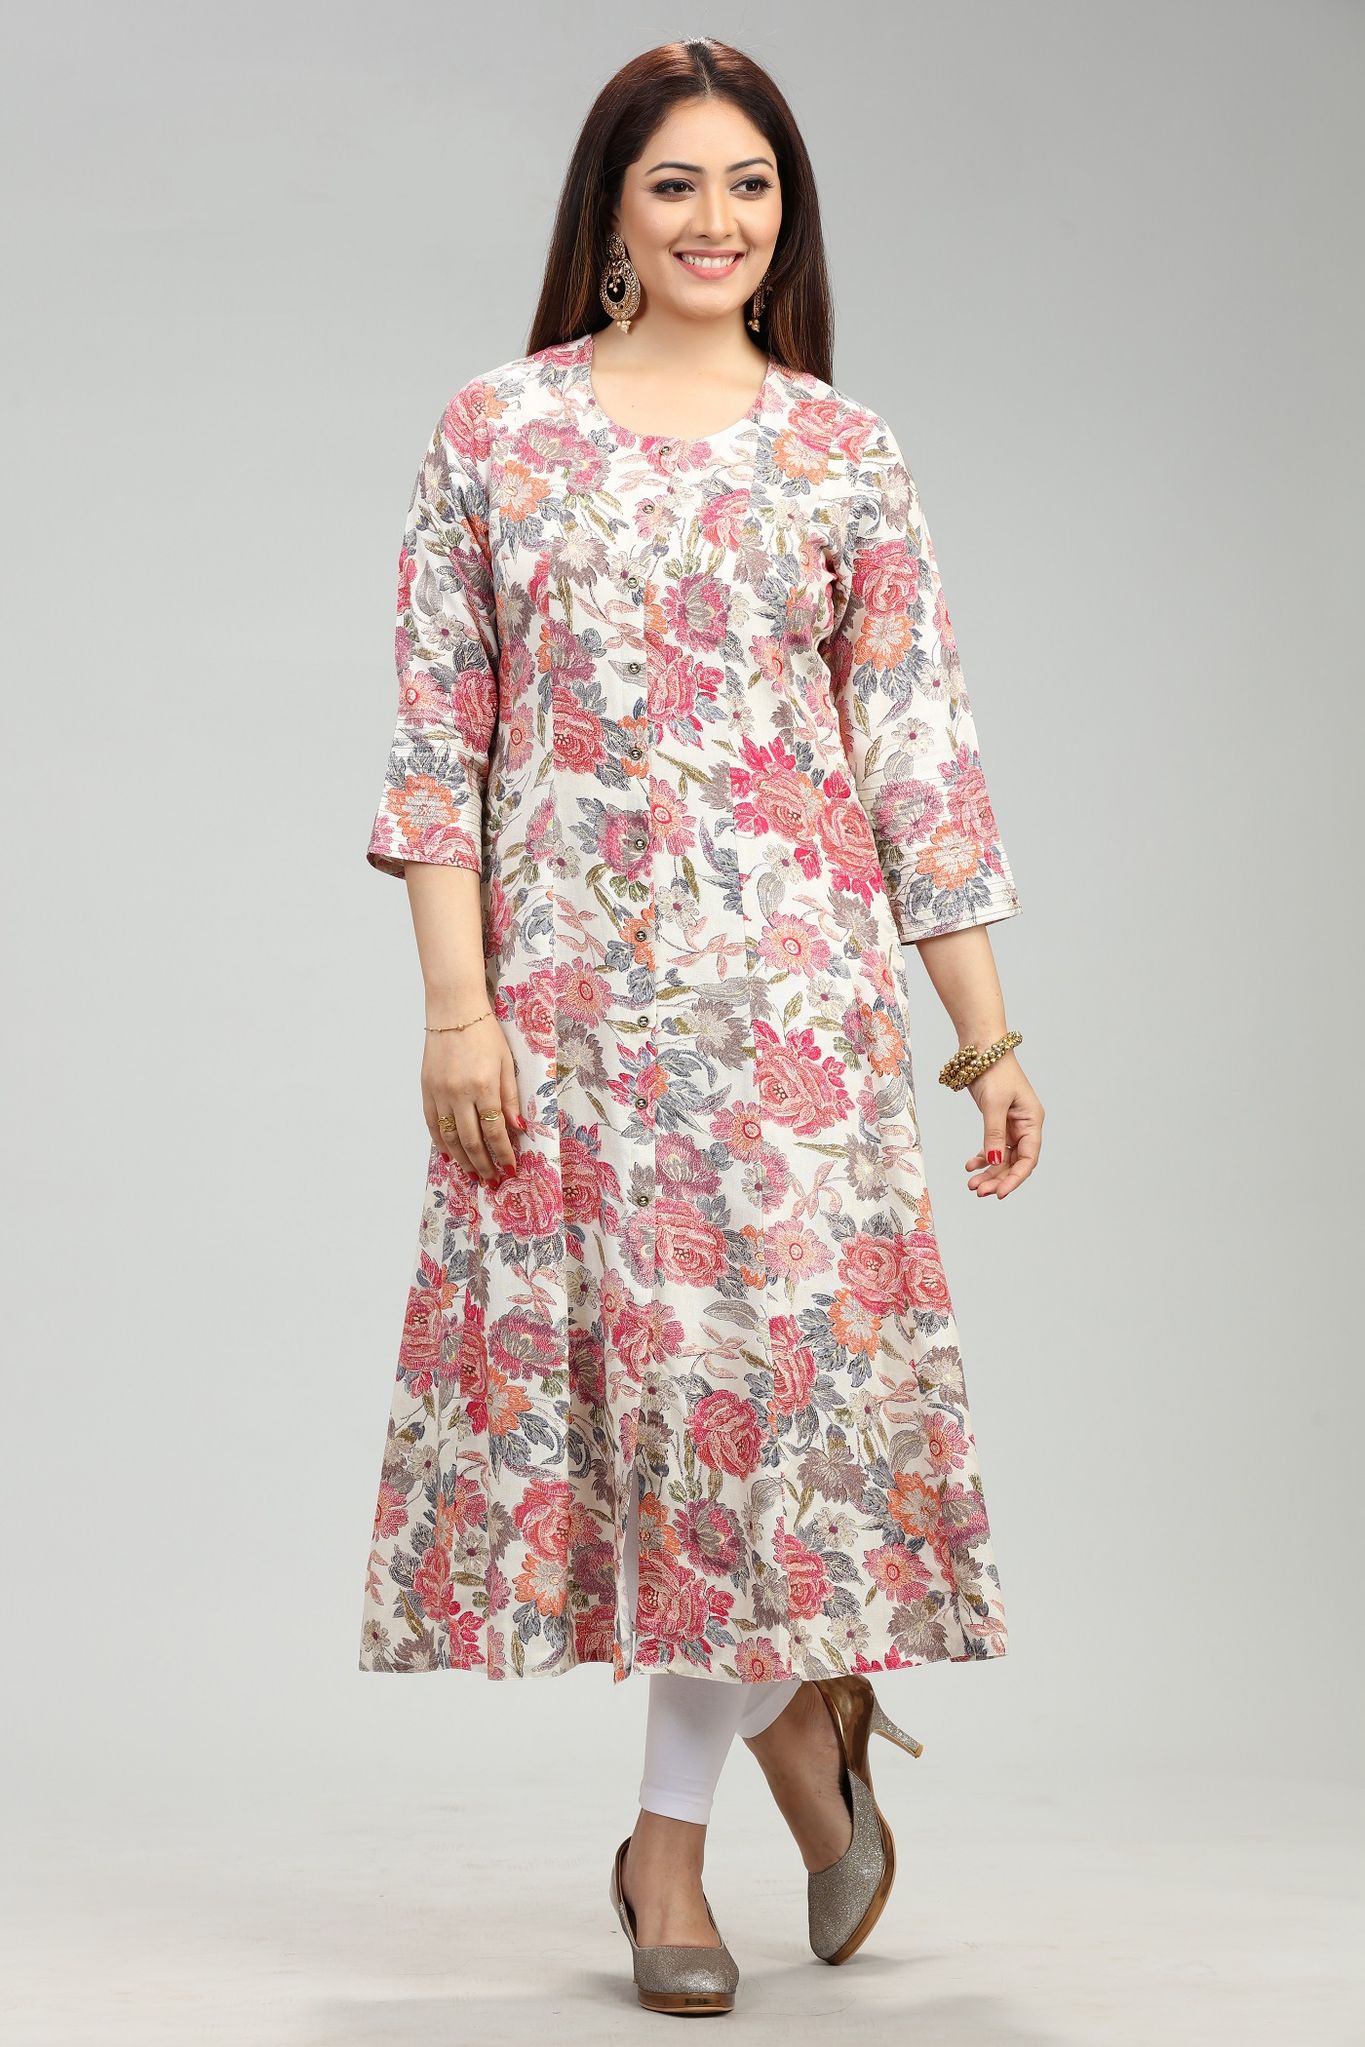 n4u nagina cotton kurtis women wear supplier online shopping